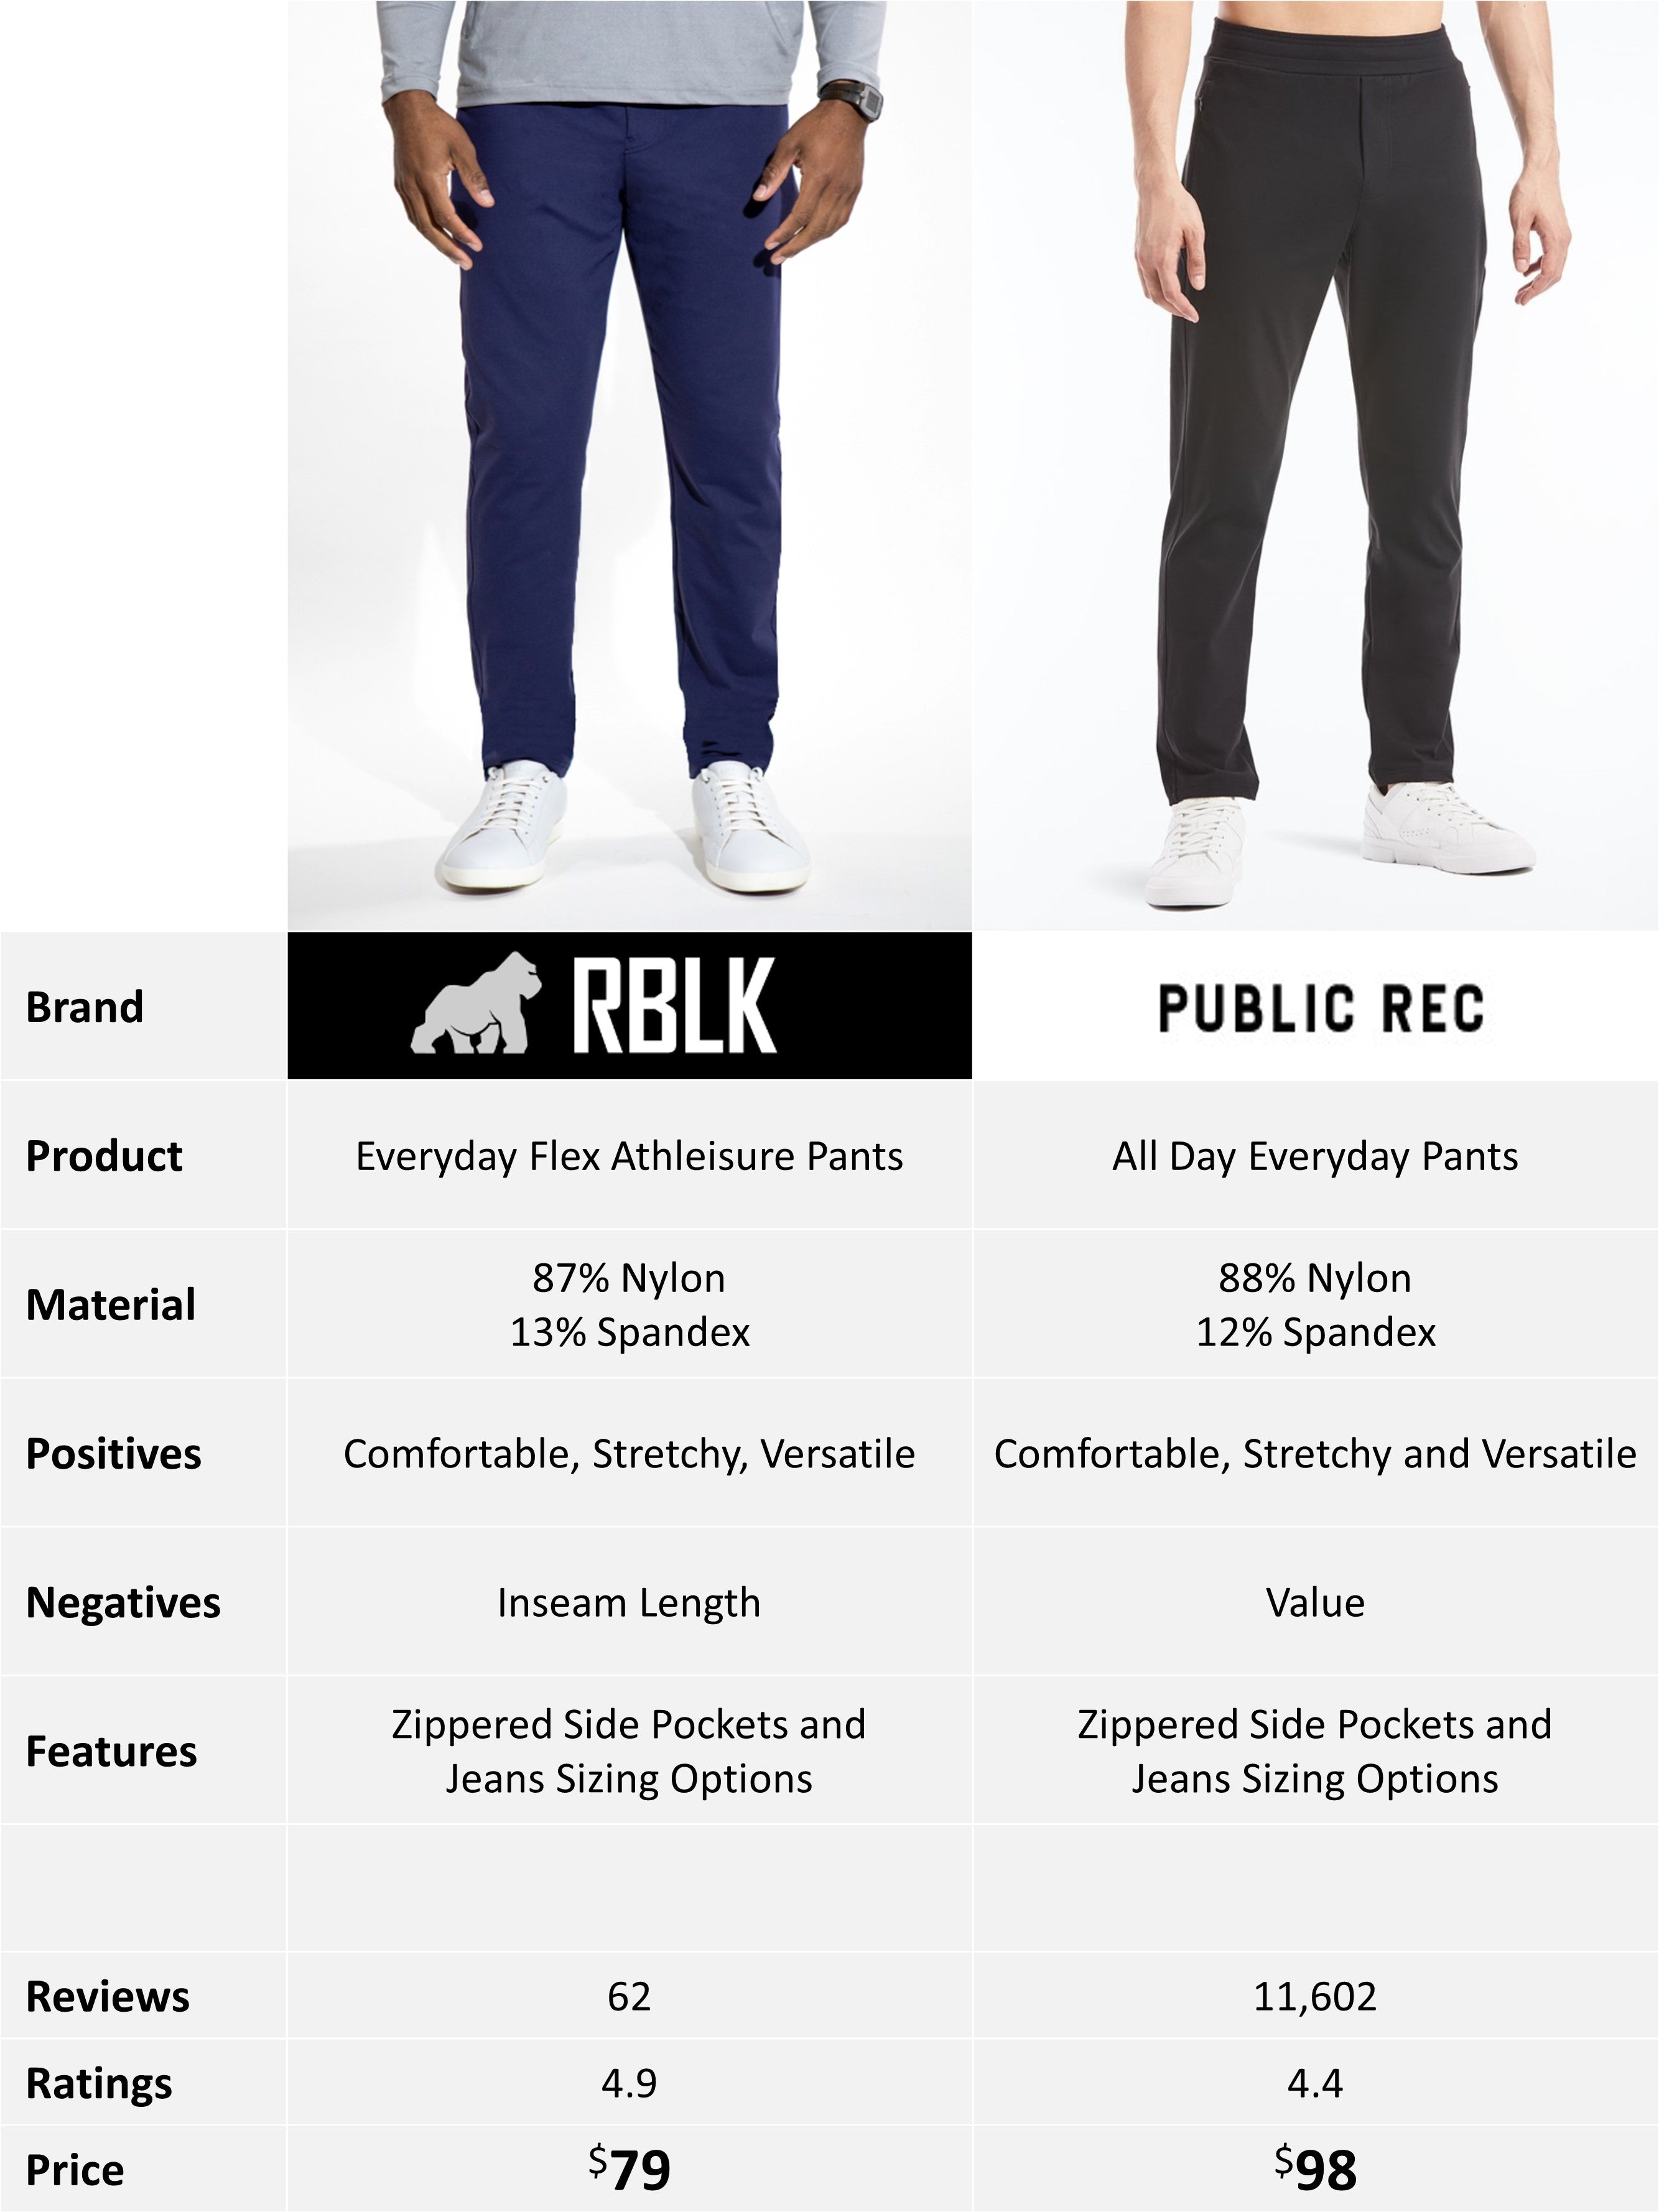 Comparing Public Rec ADED Pants to RBLK Everyday Flex Pants